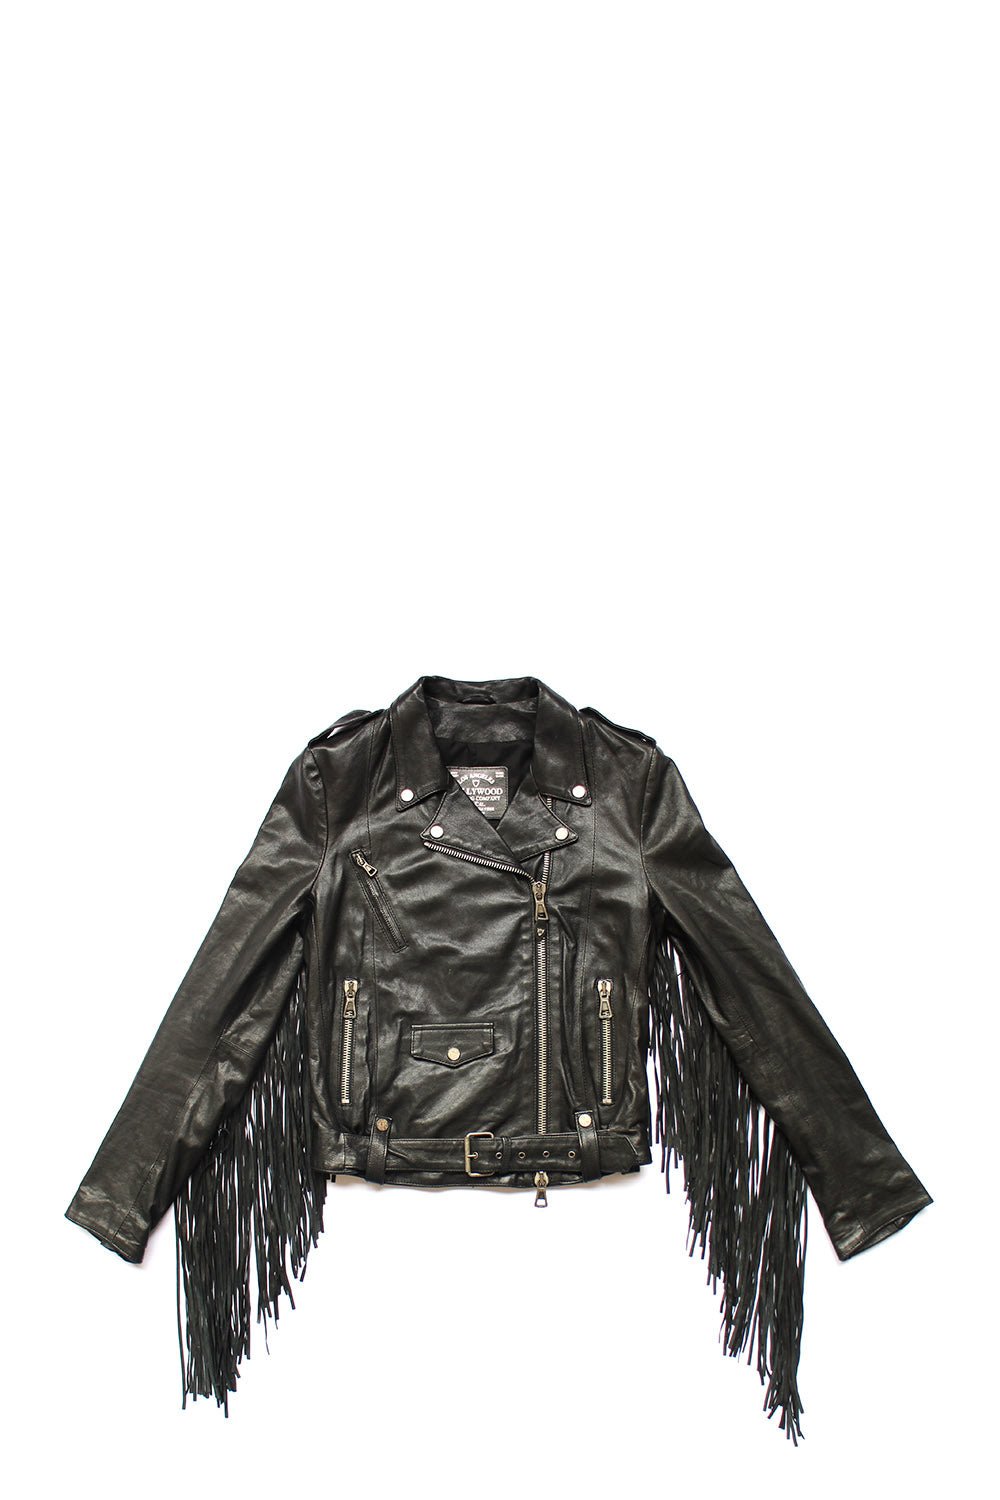 ROXANNE FINGERS JACKET Black Leather jacket. Front button closure. Front pockets. Fringes on the back. HTC LOS ANGELES